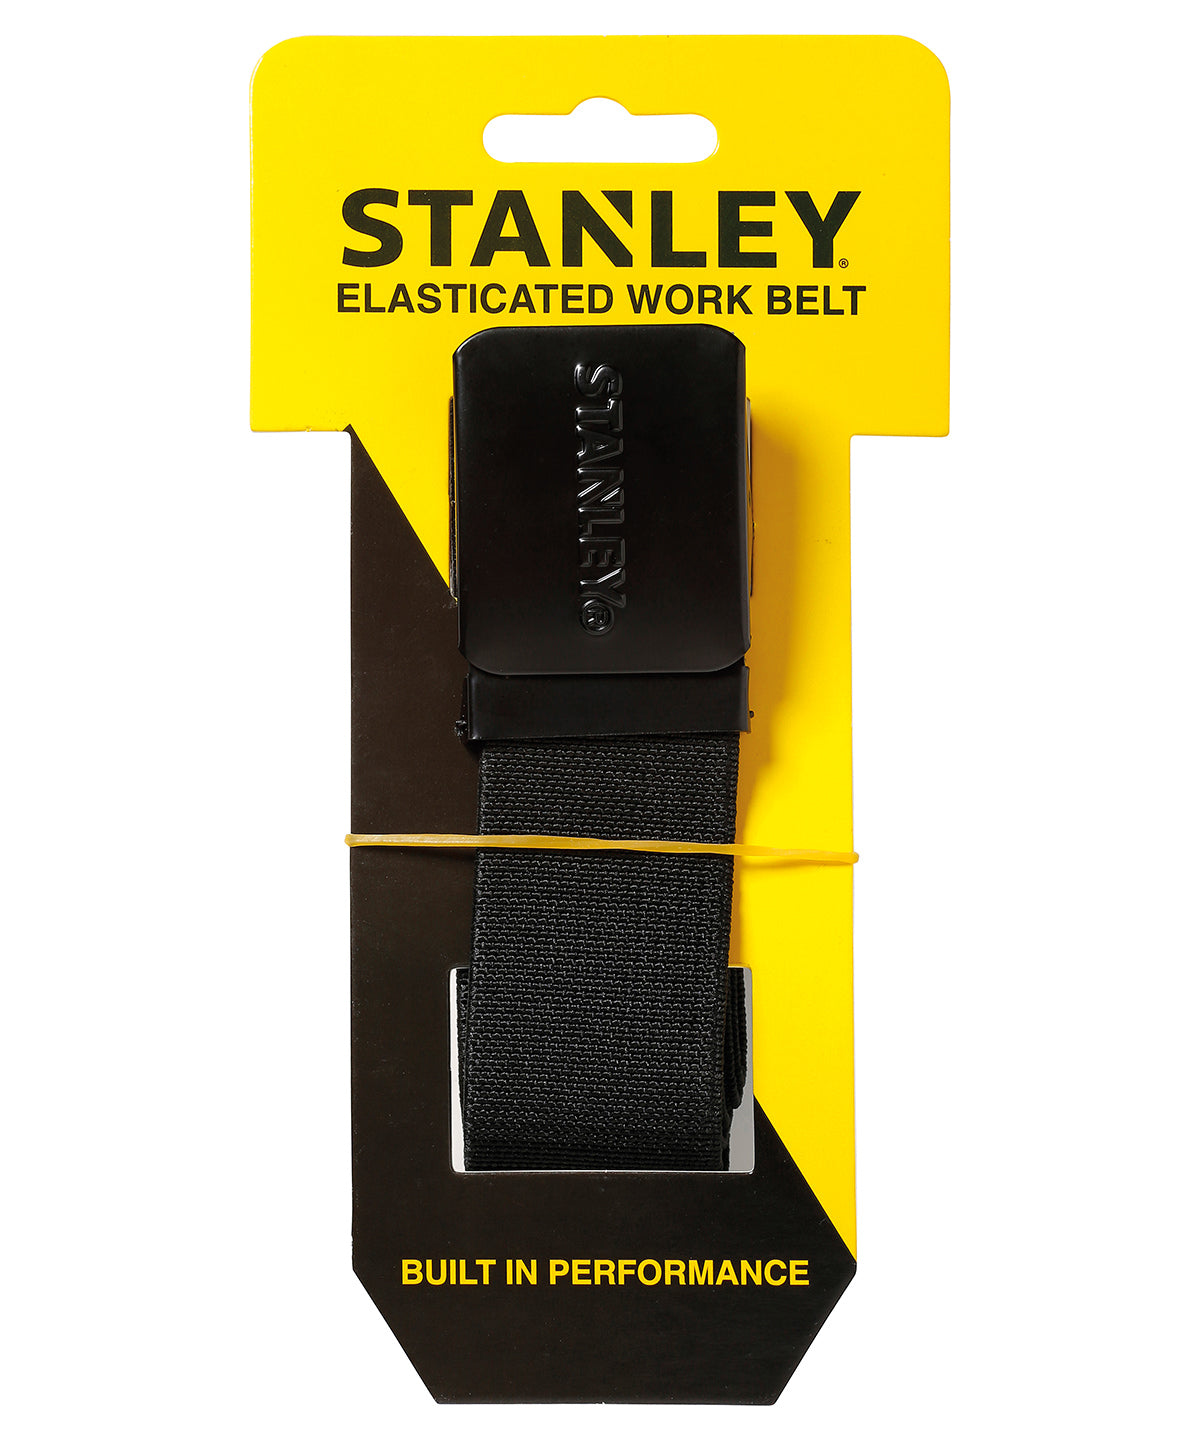 Stanley branded belt